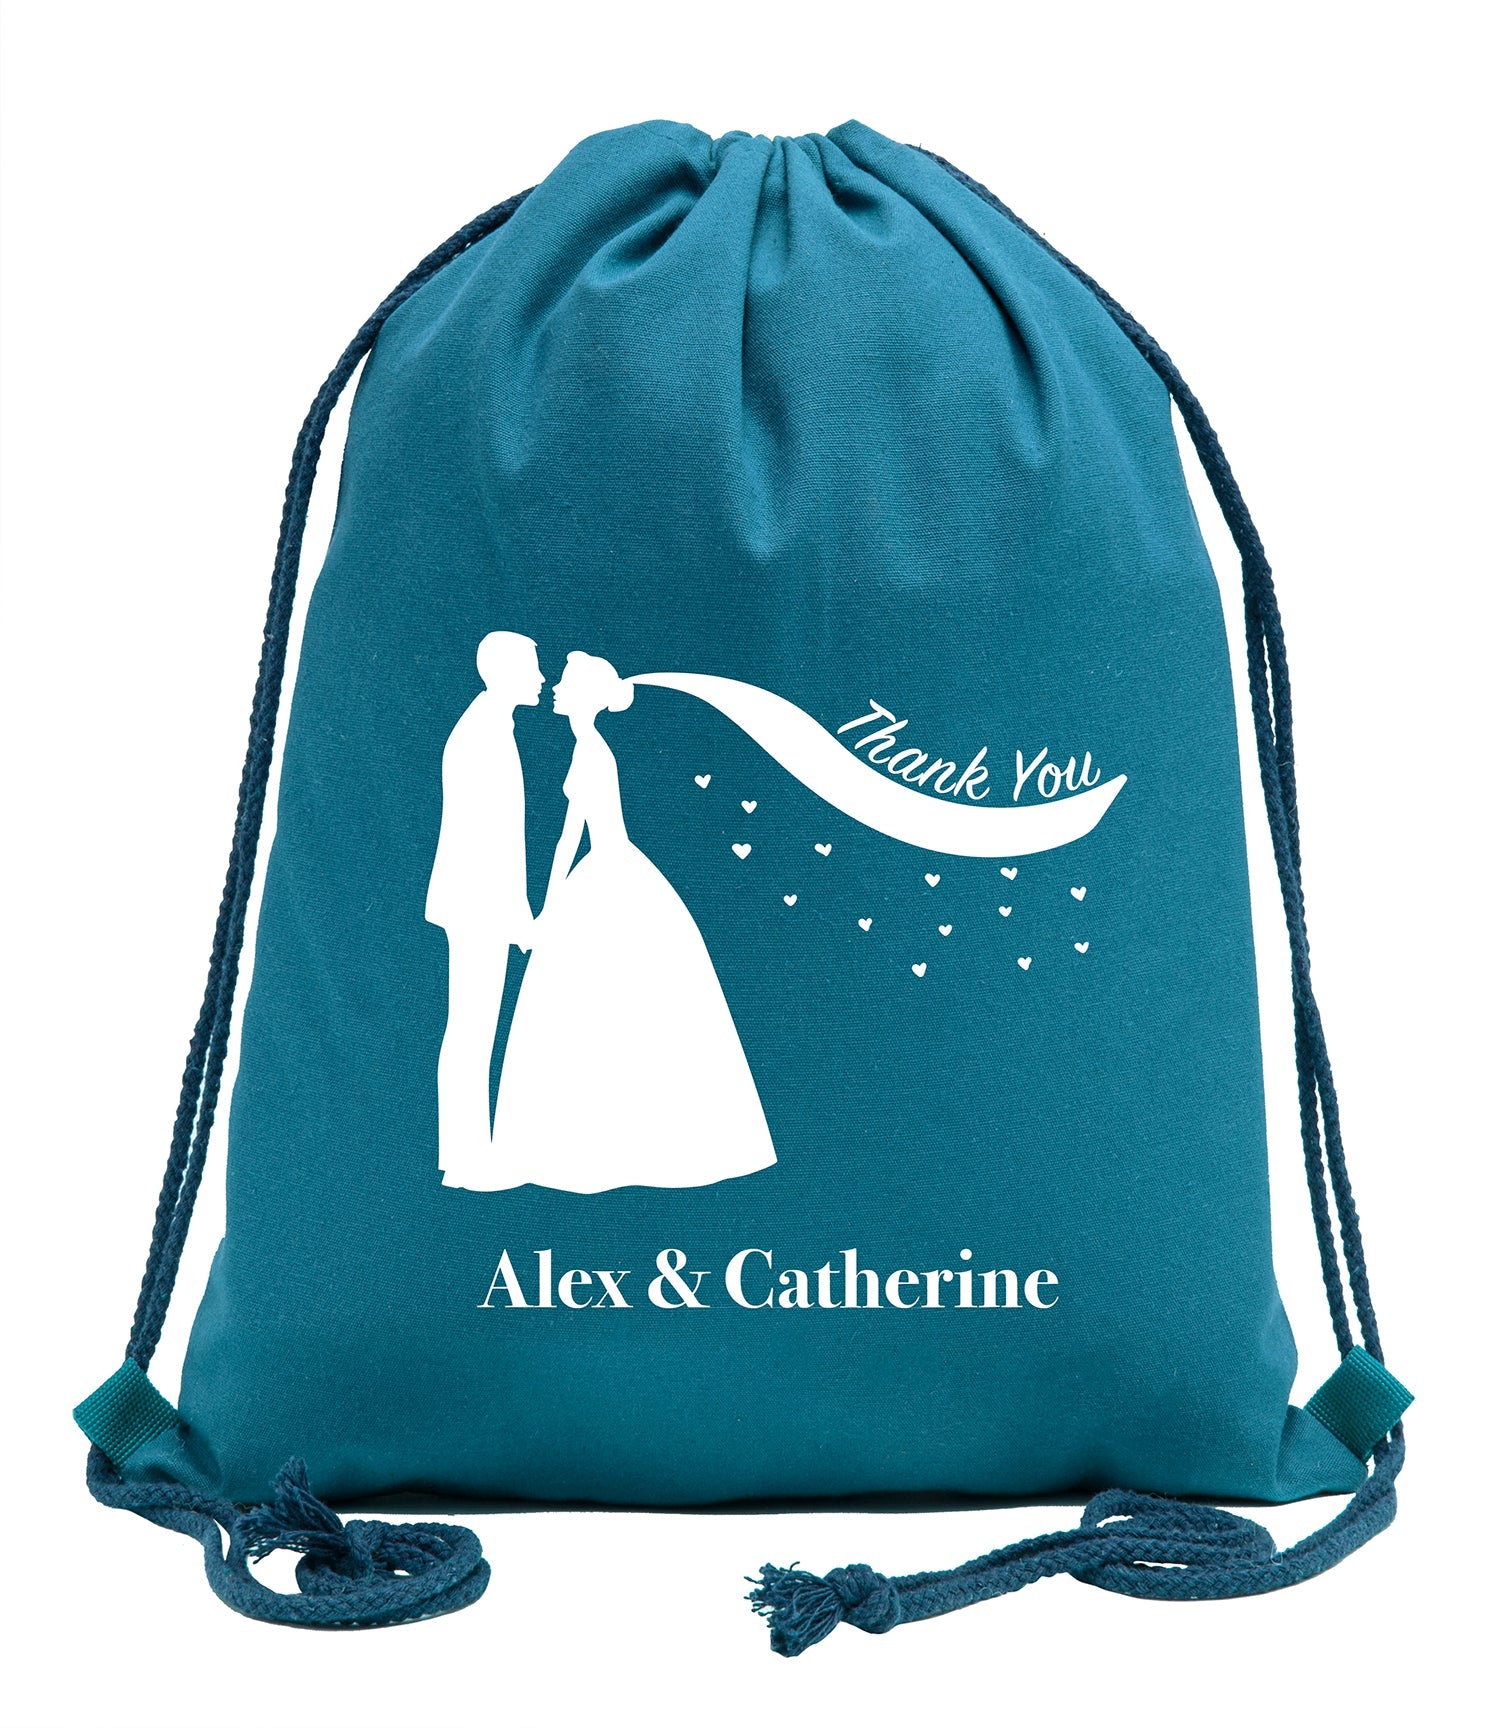 Tiffany Custom Tote Bag Name and Wedding Role